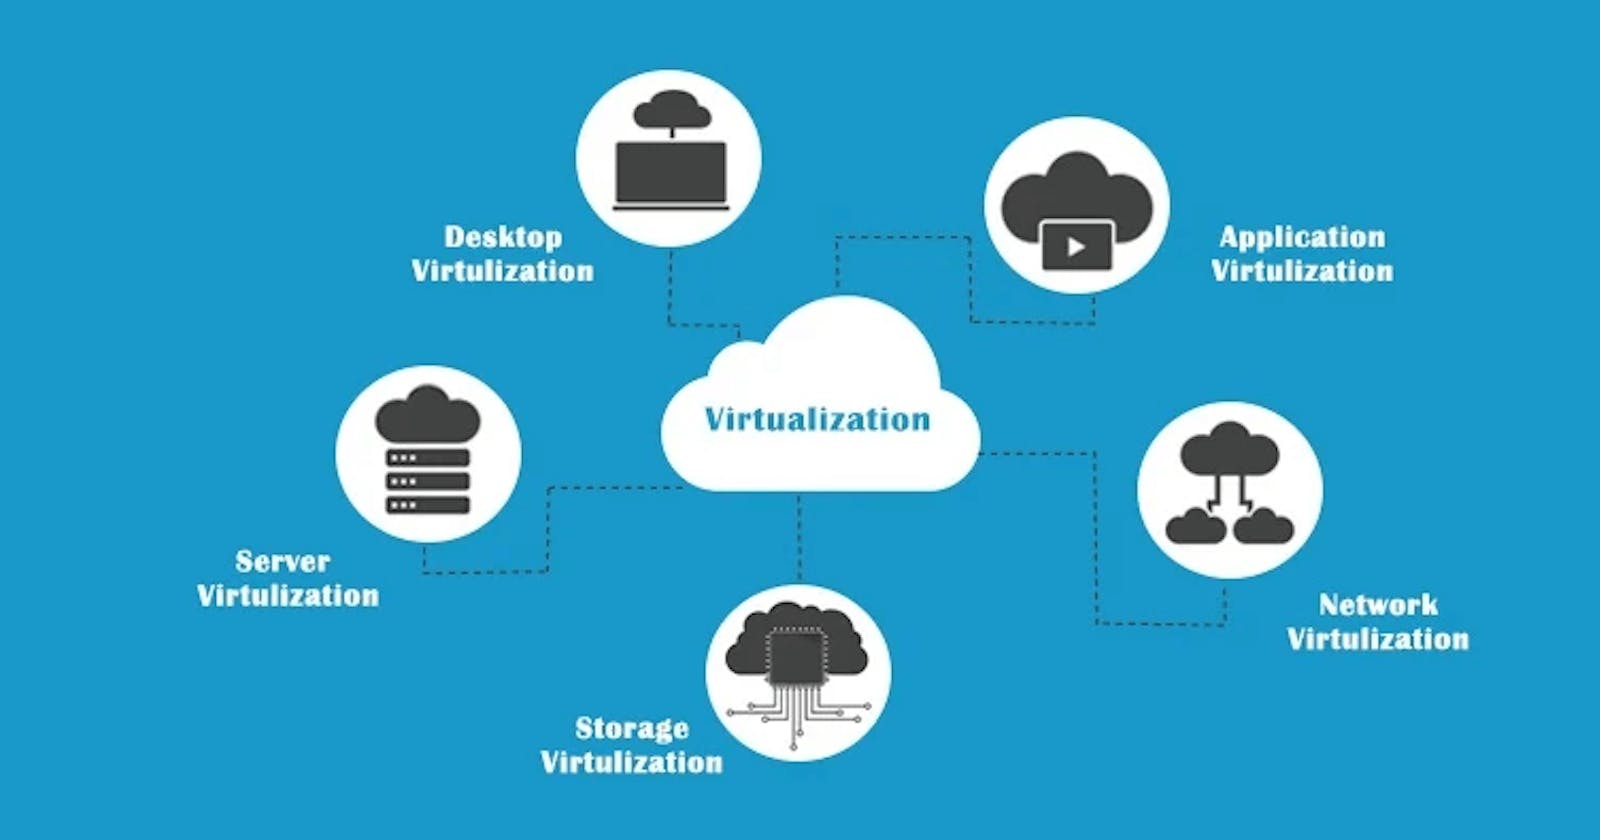 Day 2: Types of virtualization: Server, storage, network